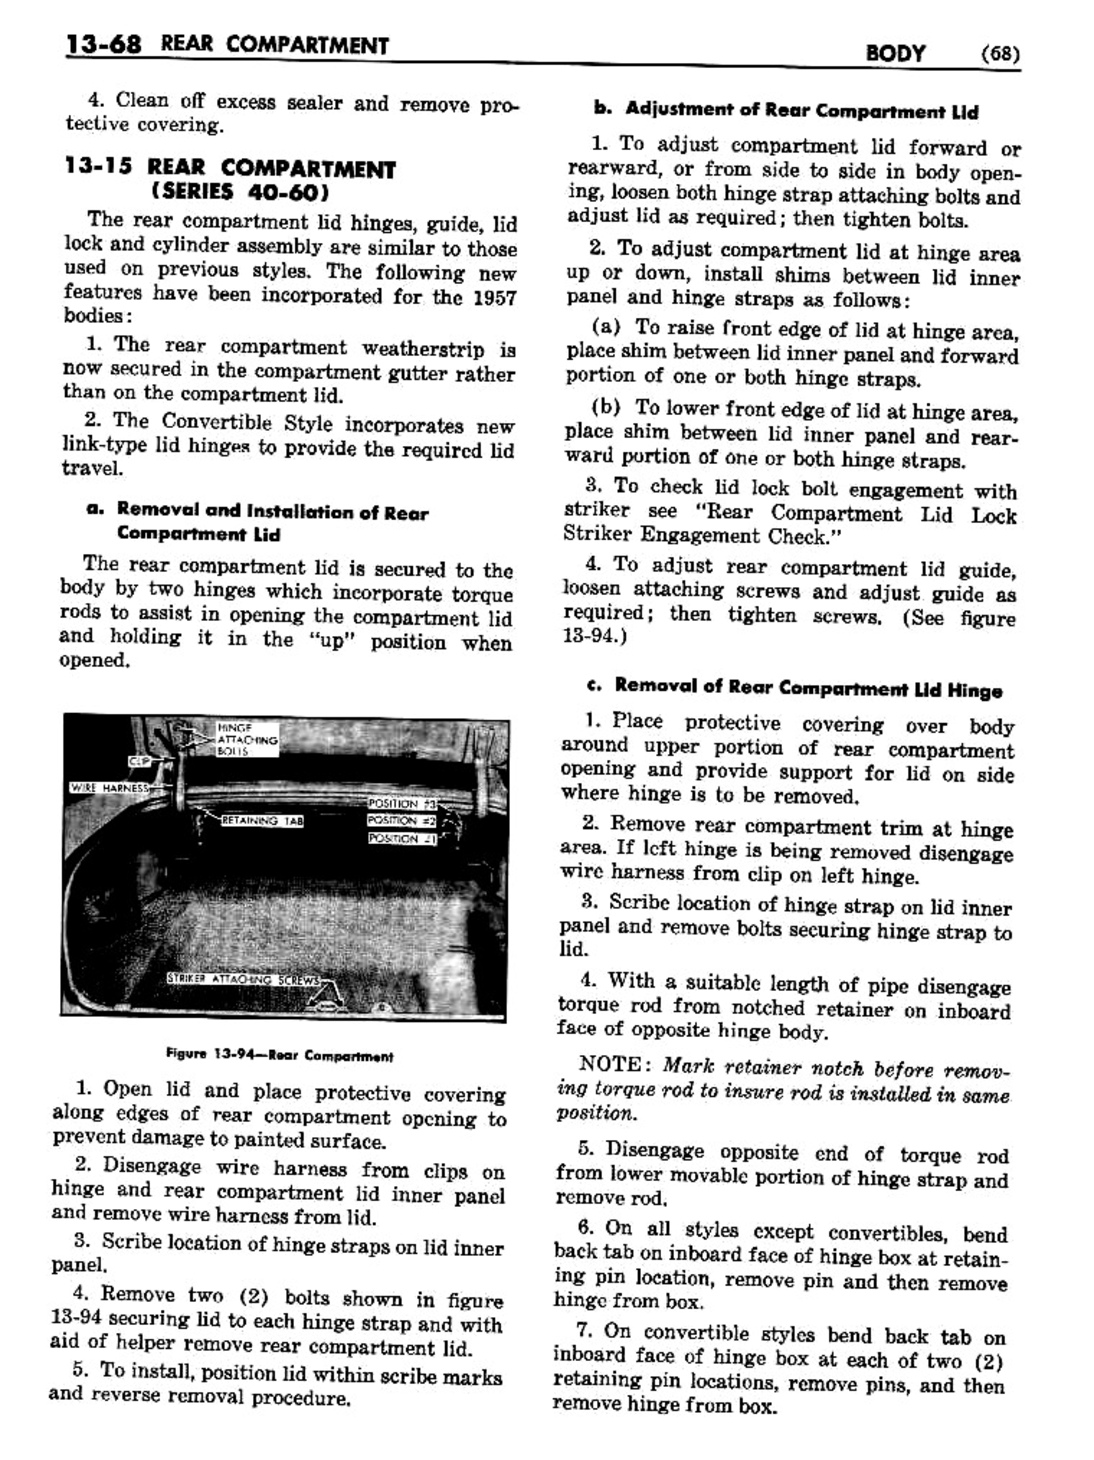 n_1957 Buick Body Service Manual-070-070.jpg